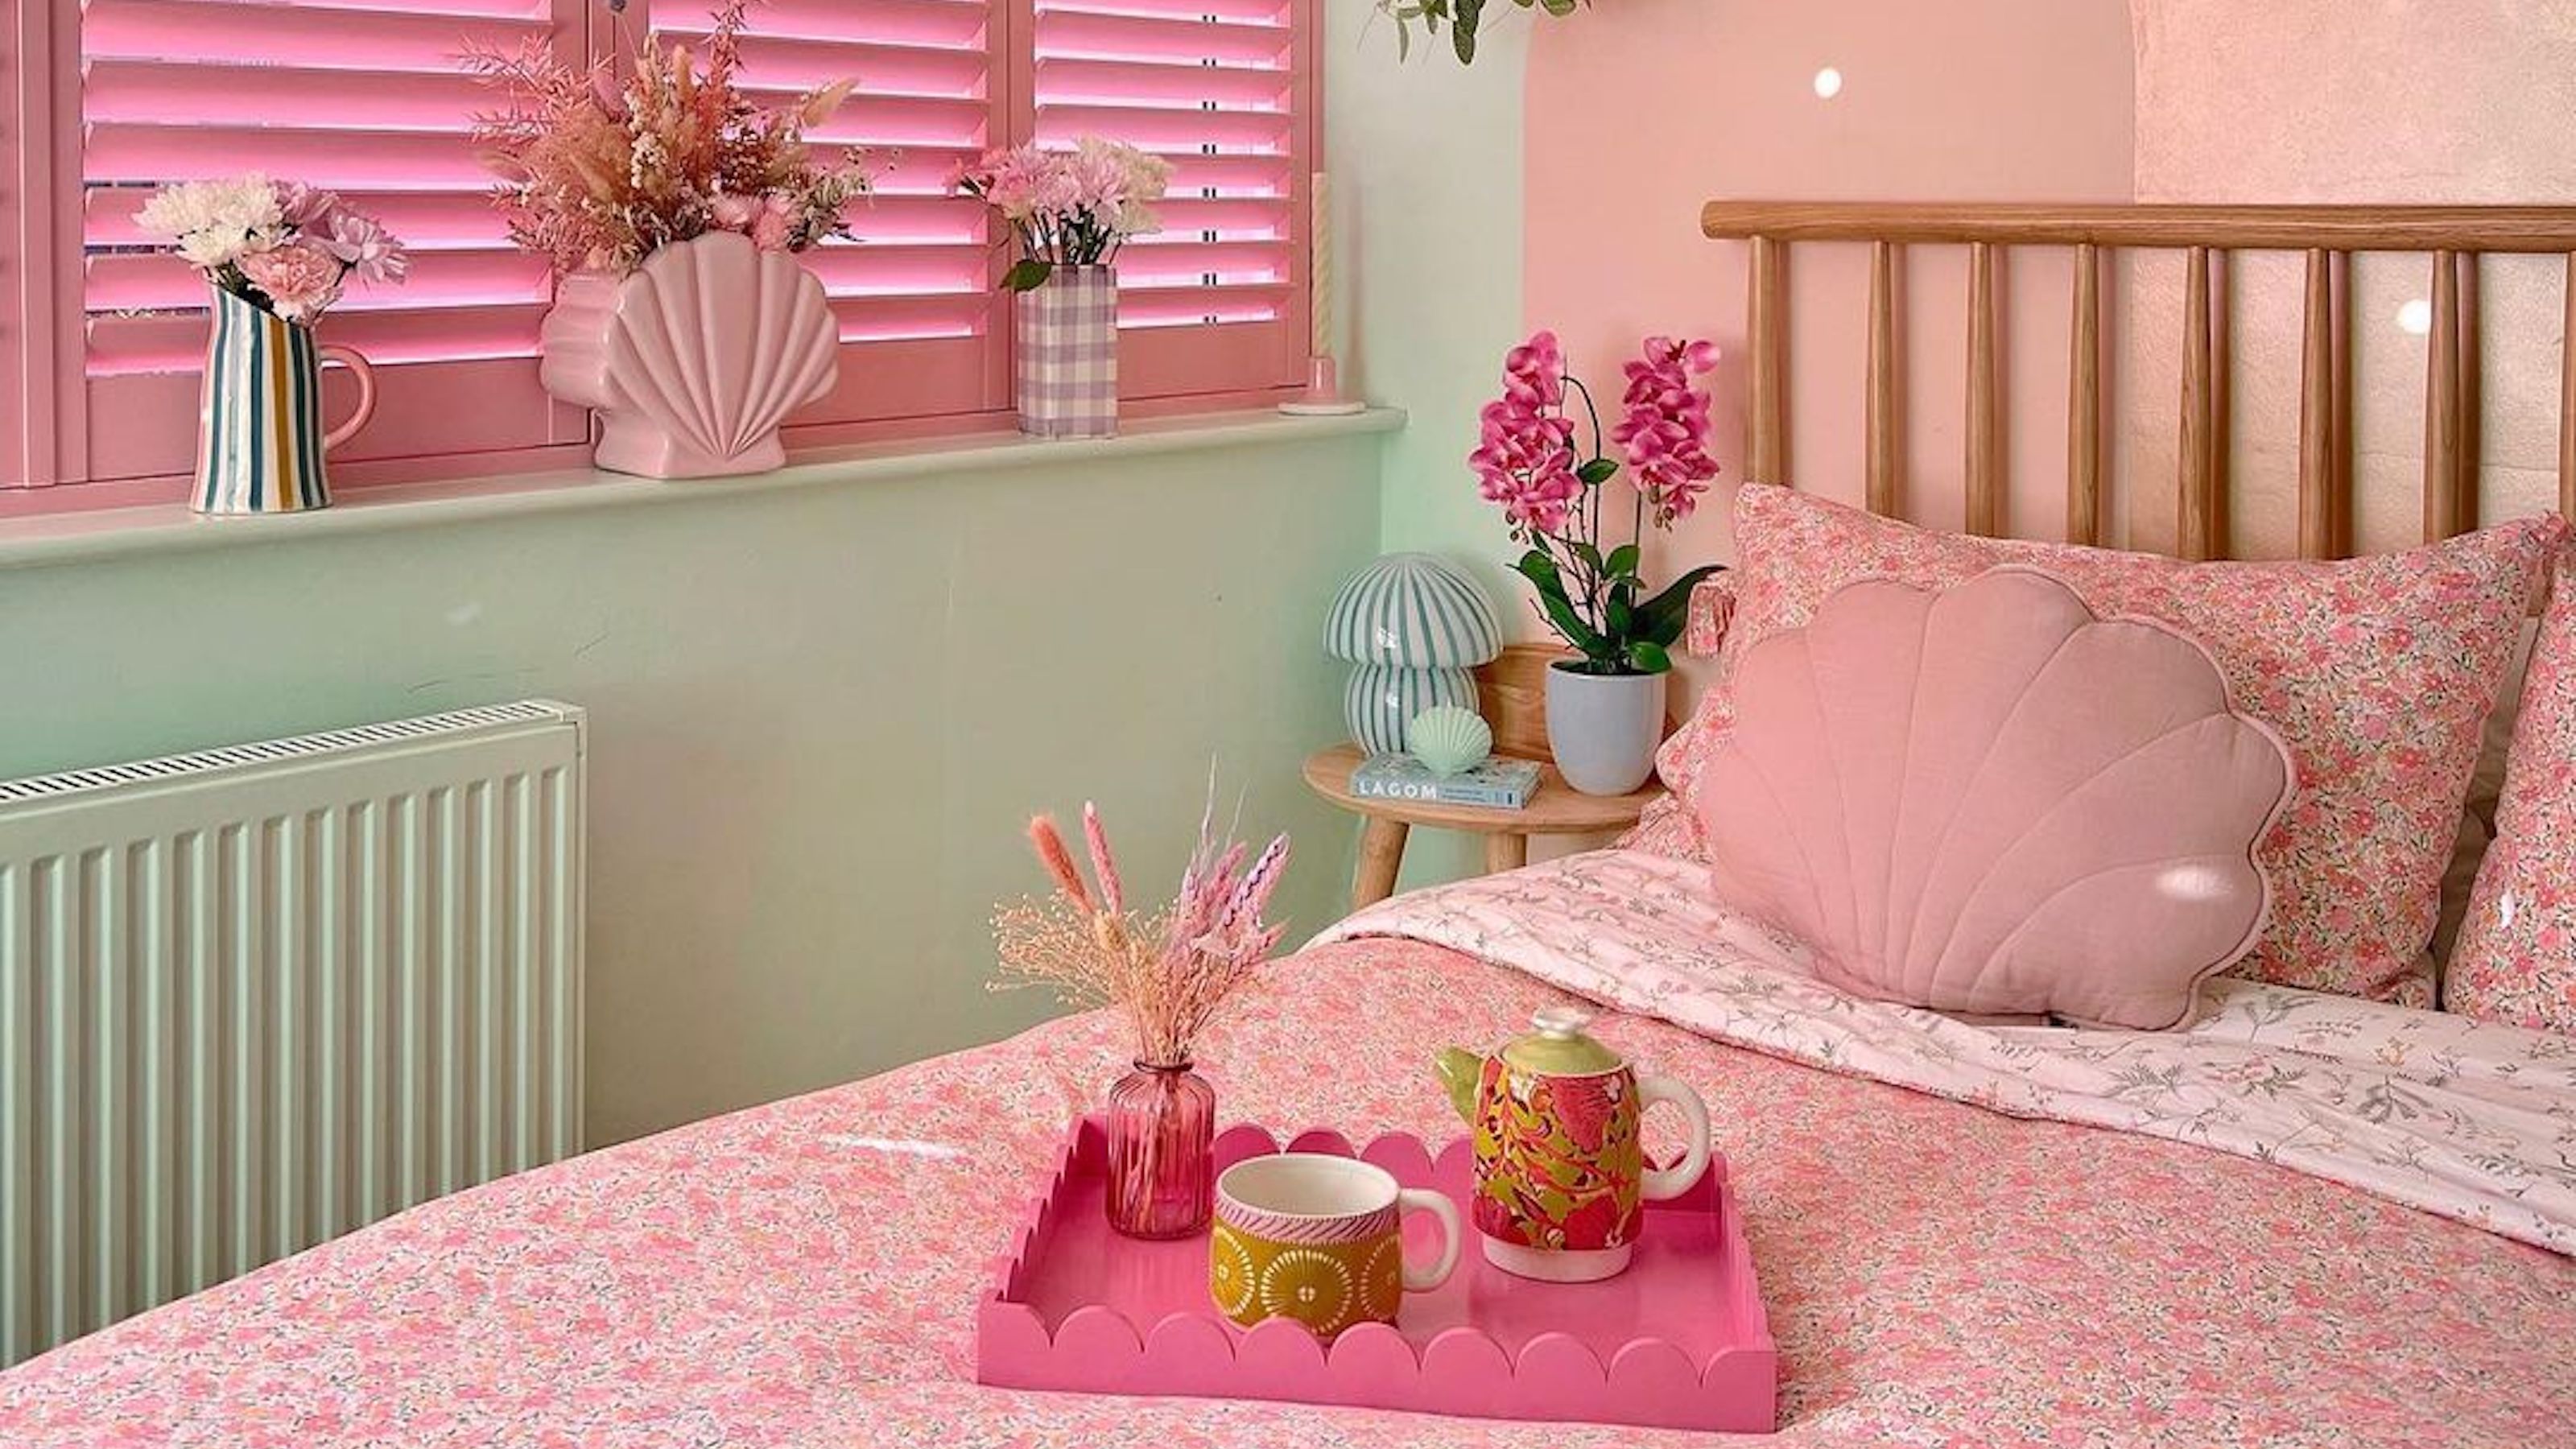 Korean aesthetic bedroom decor ideas :) : r/aesthetic